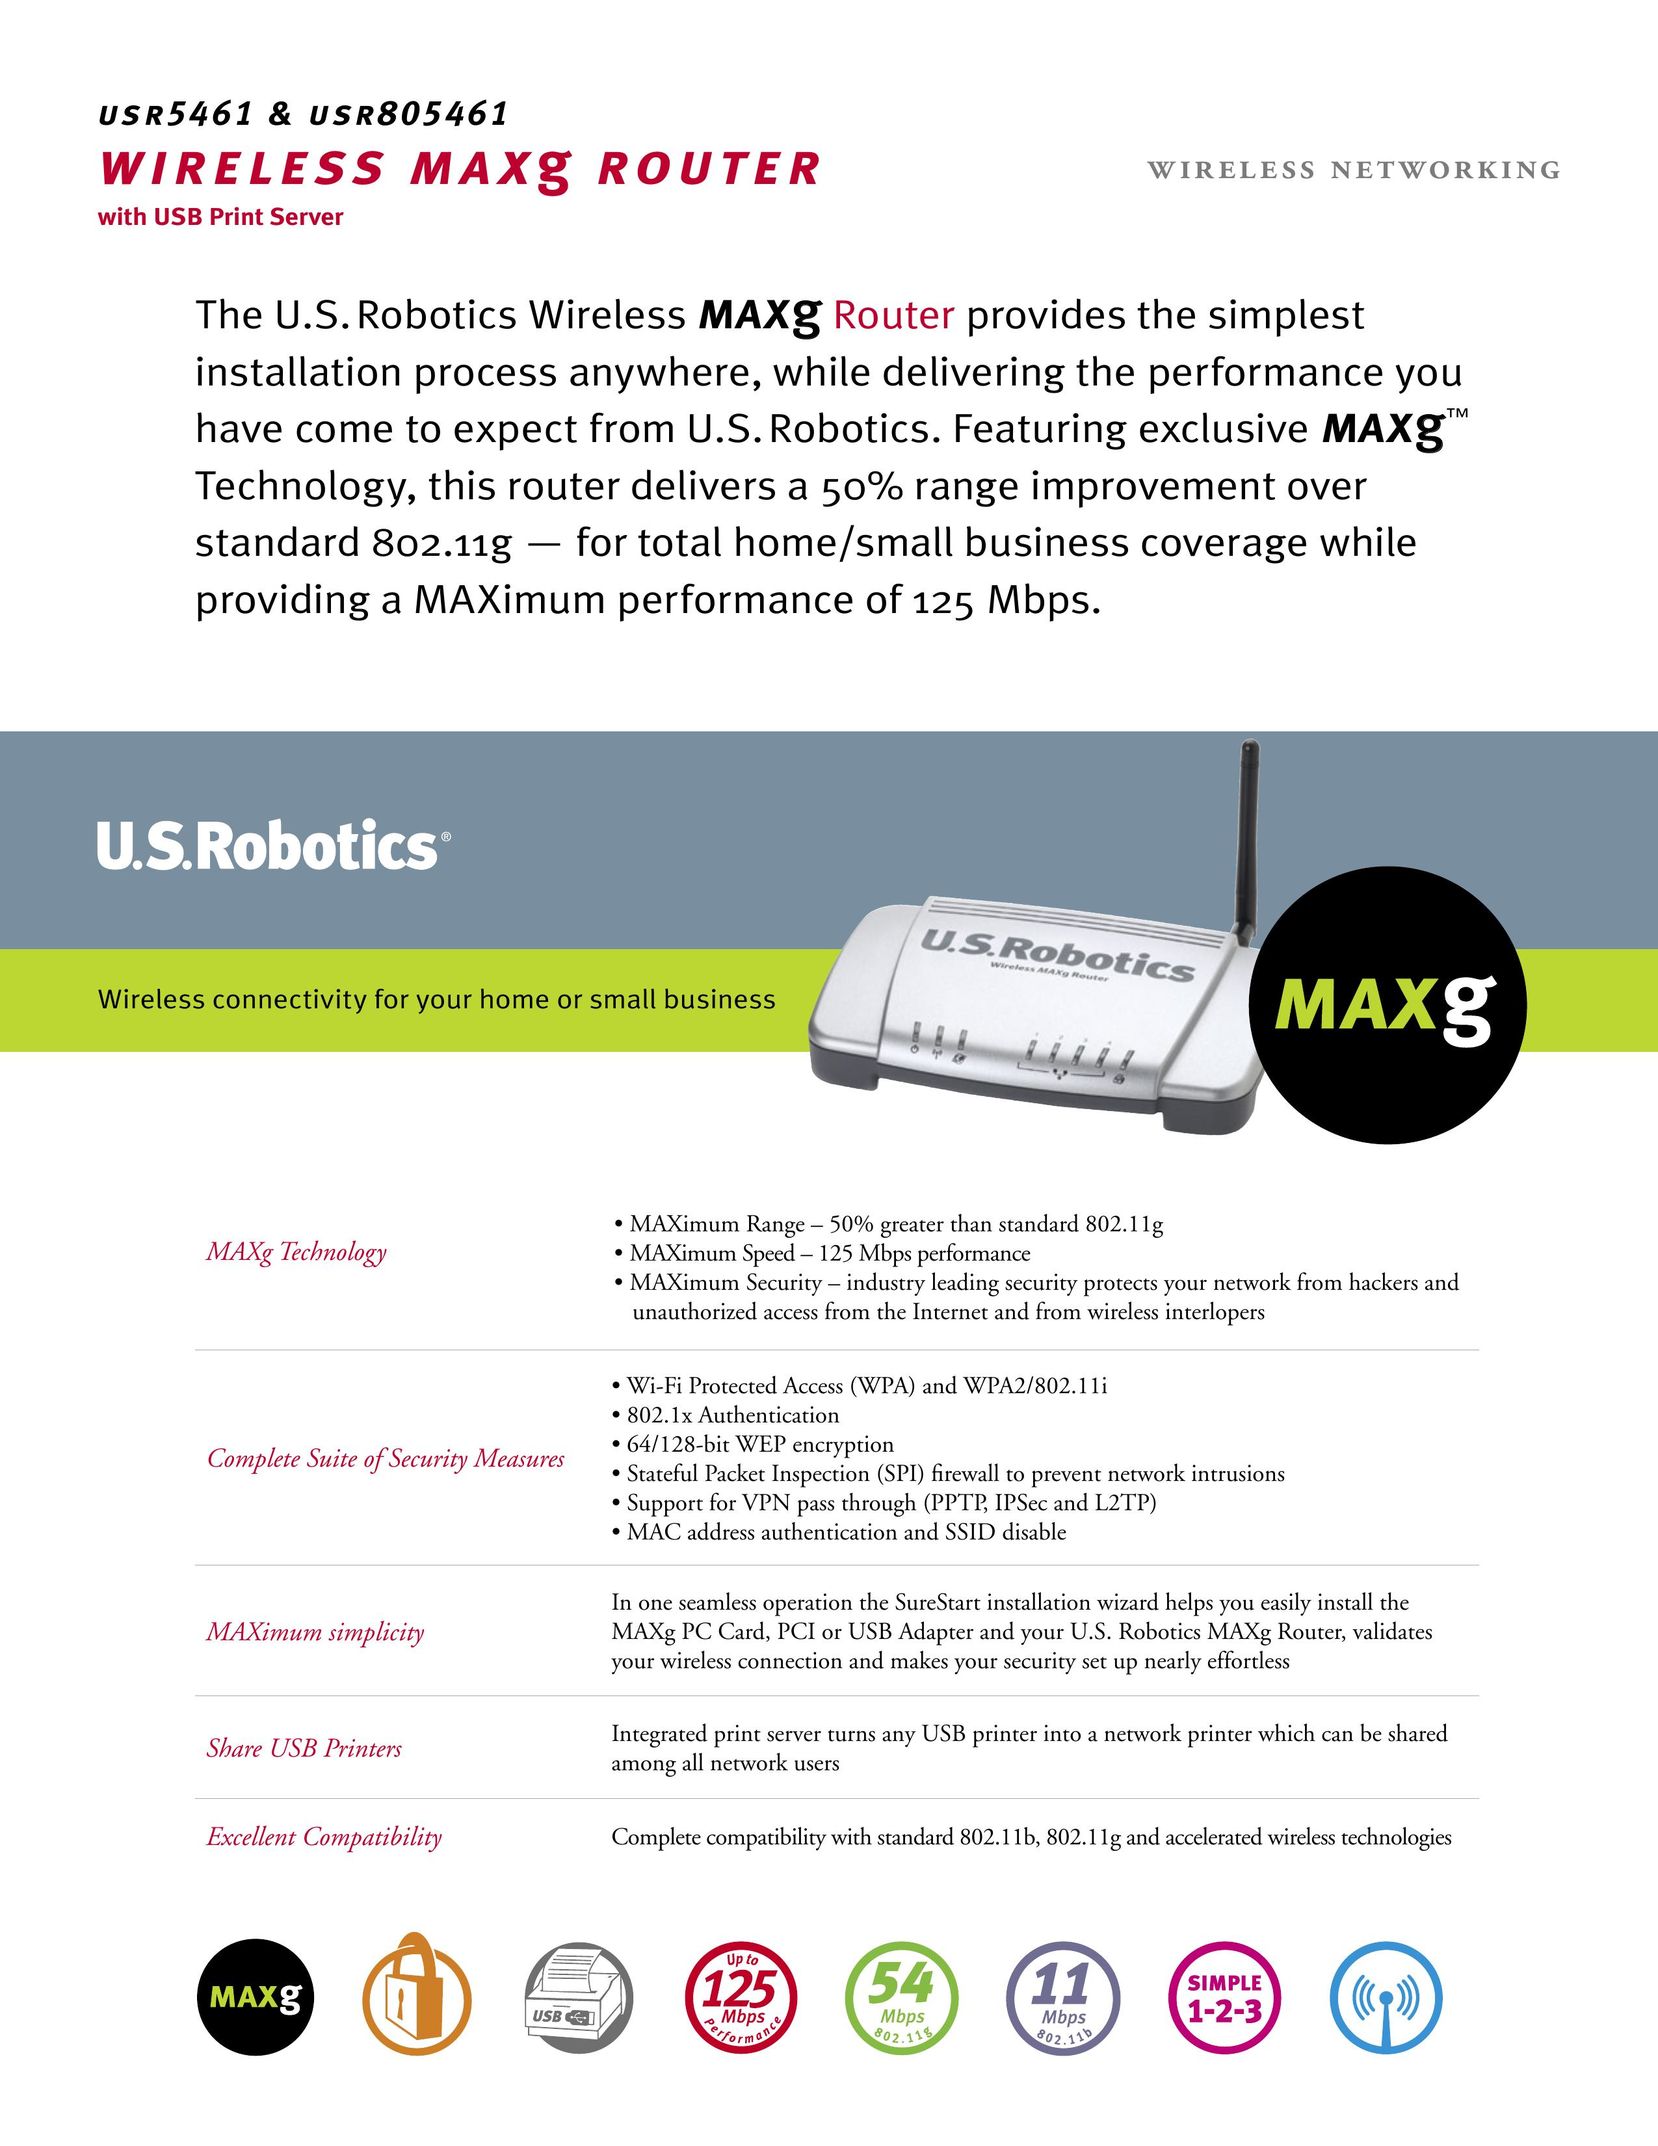 USRobotics usr5461 Network Router User Manual